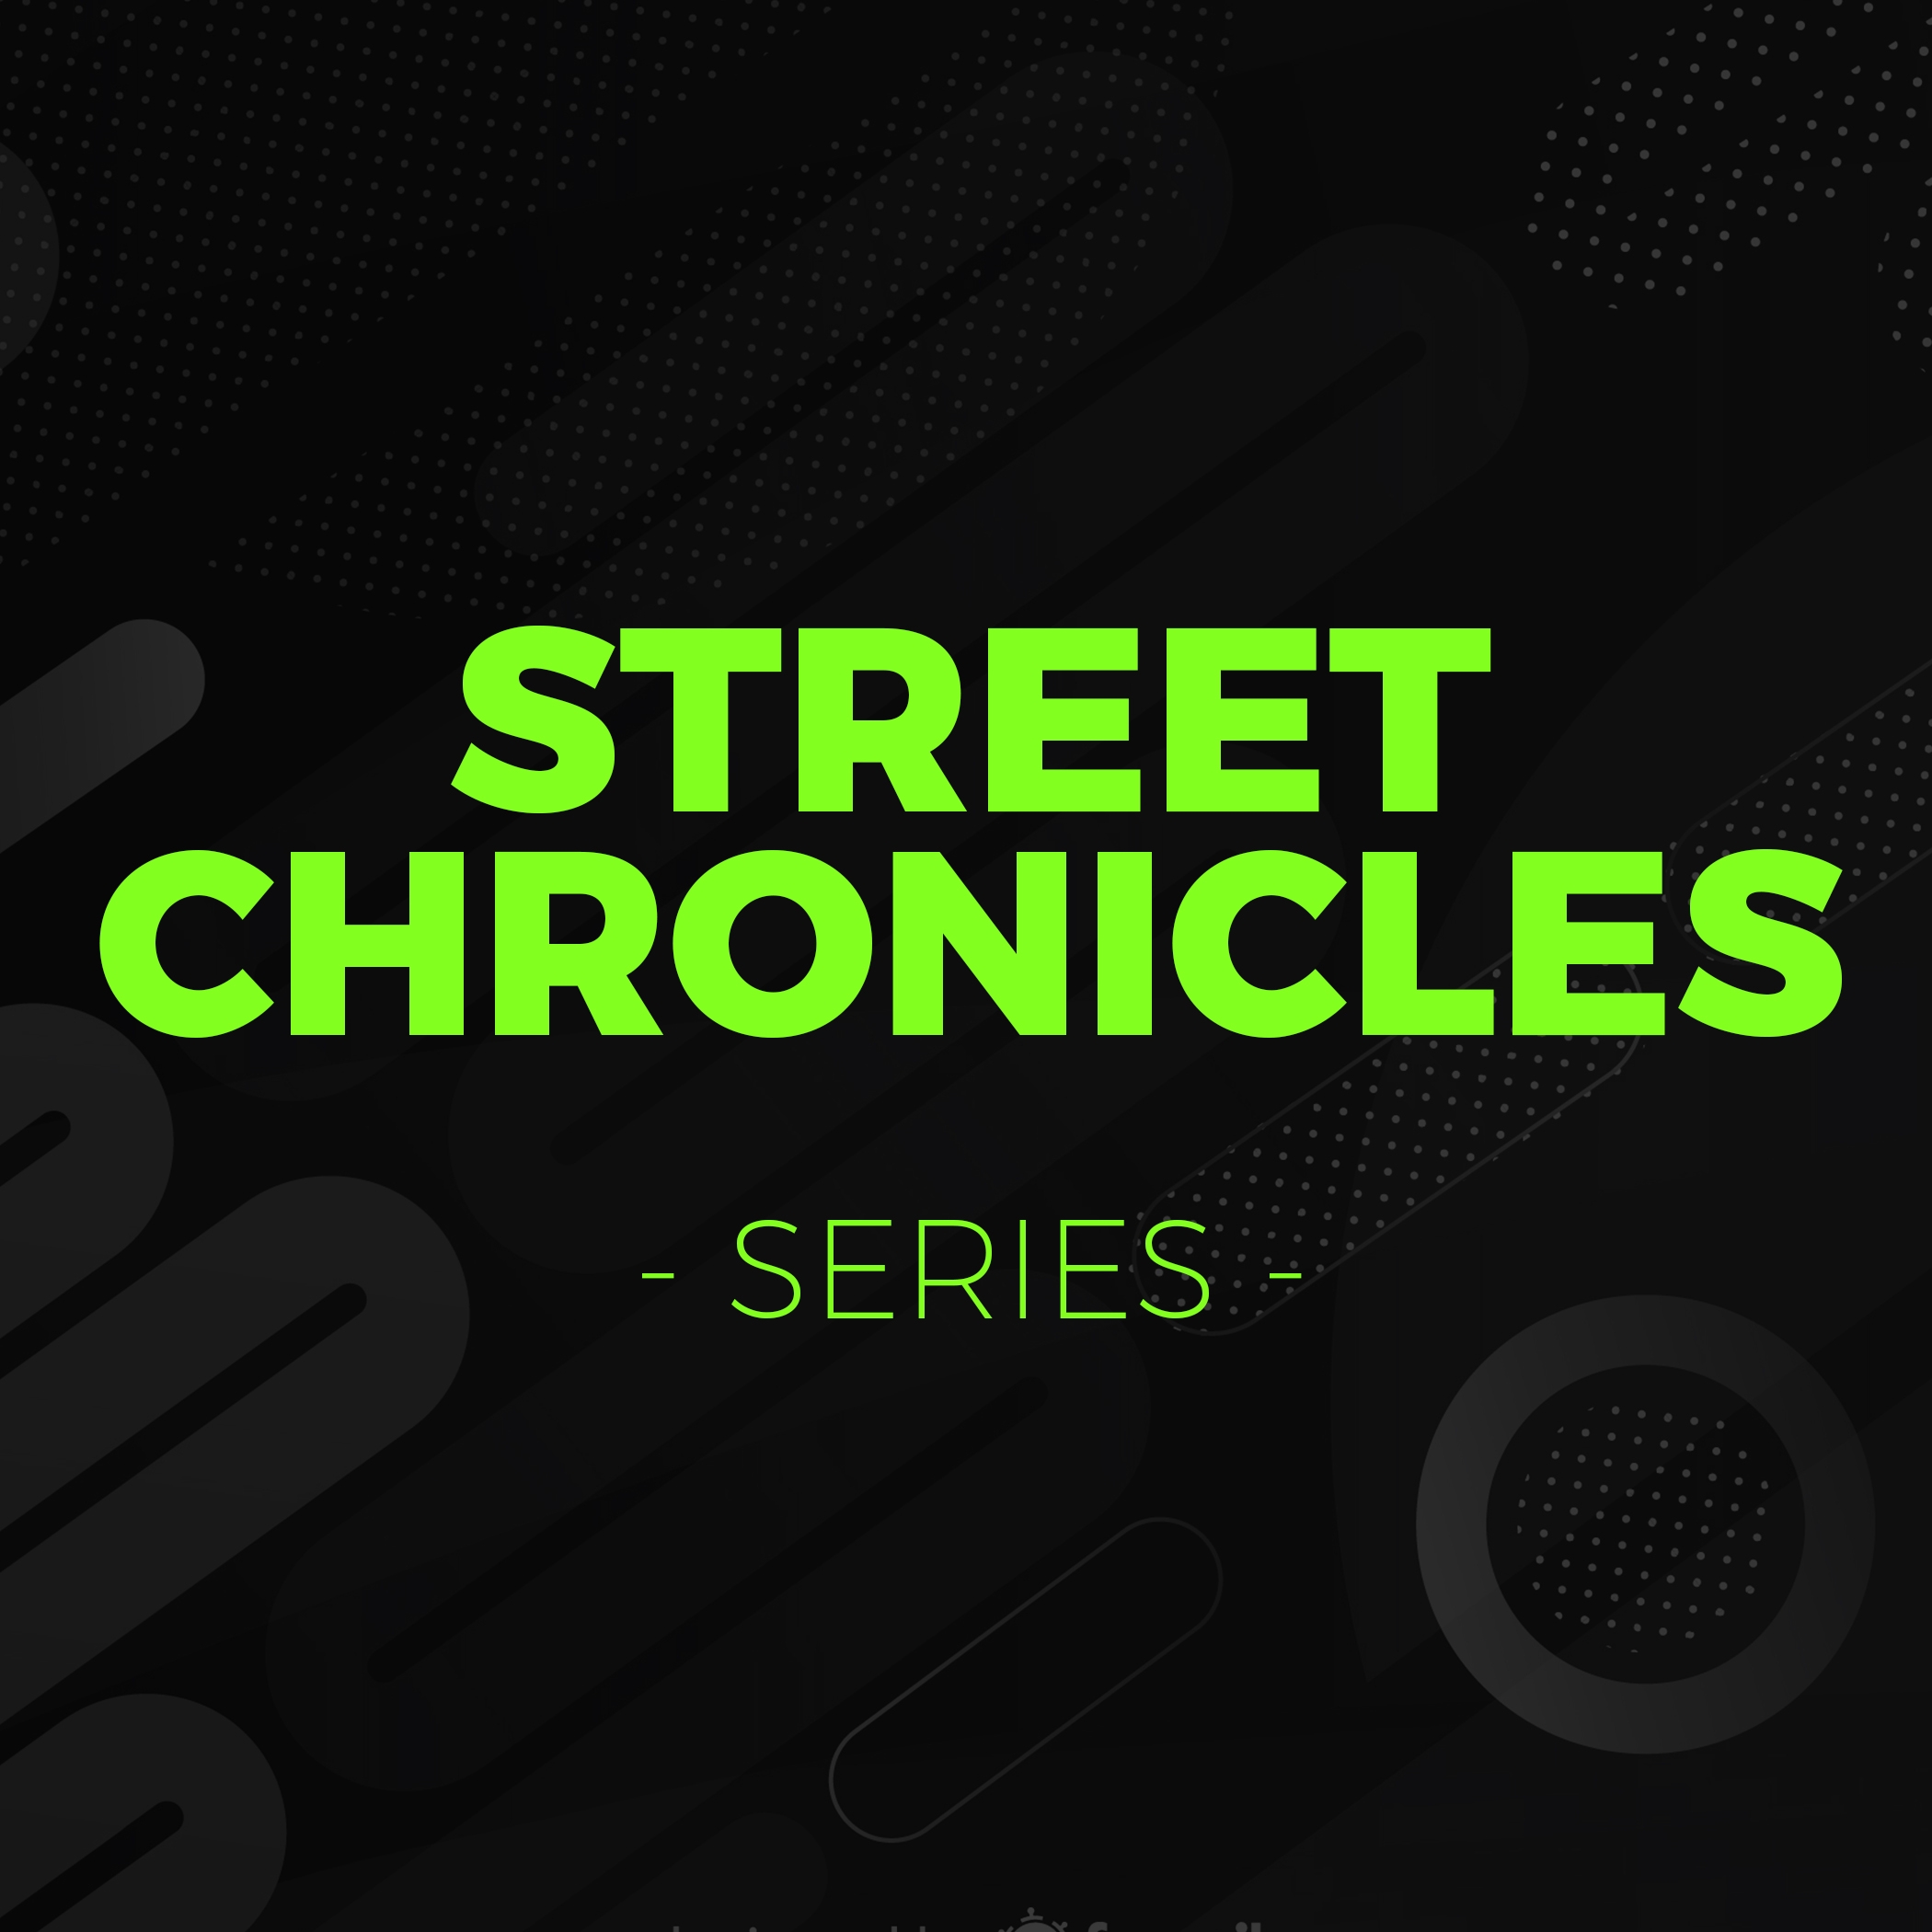 Street Chronicles Series